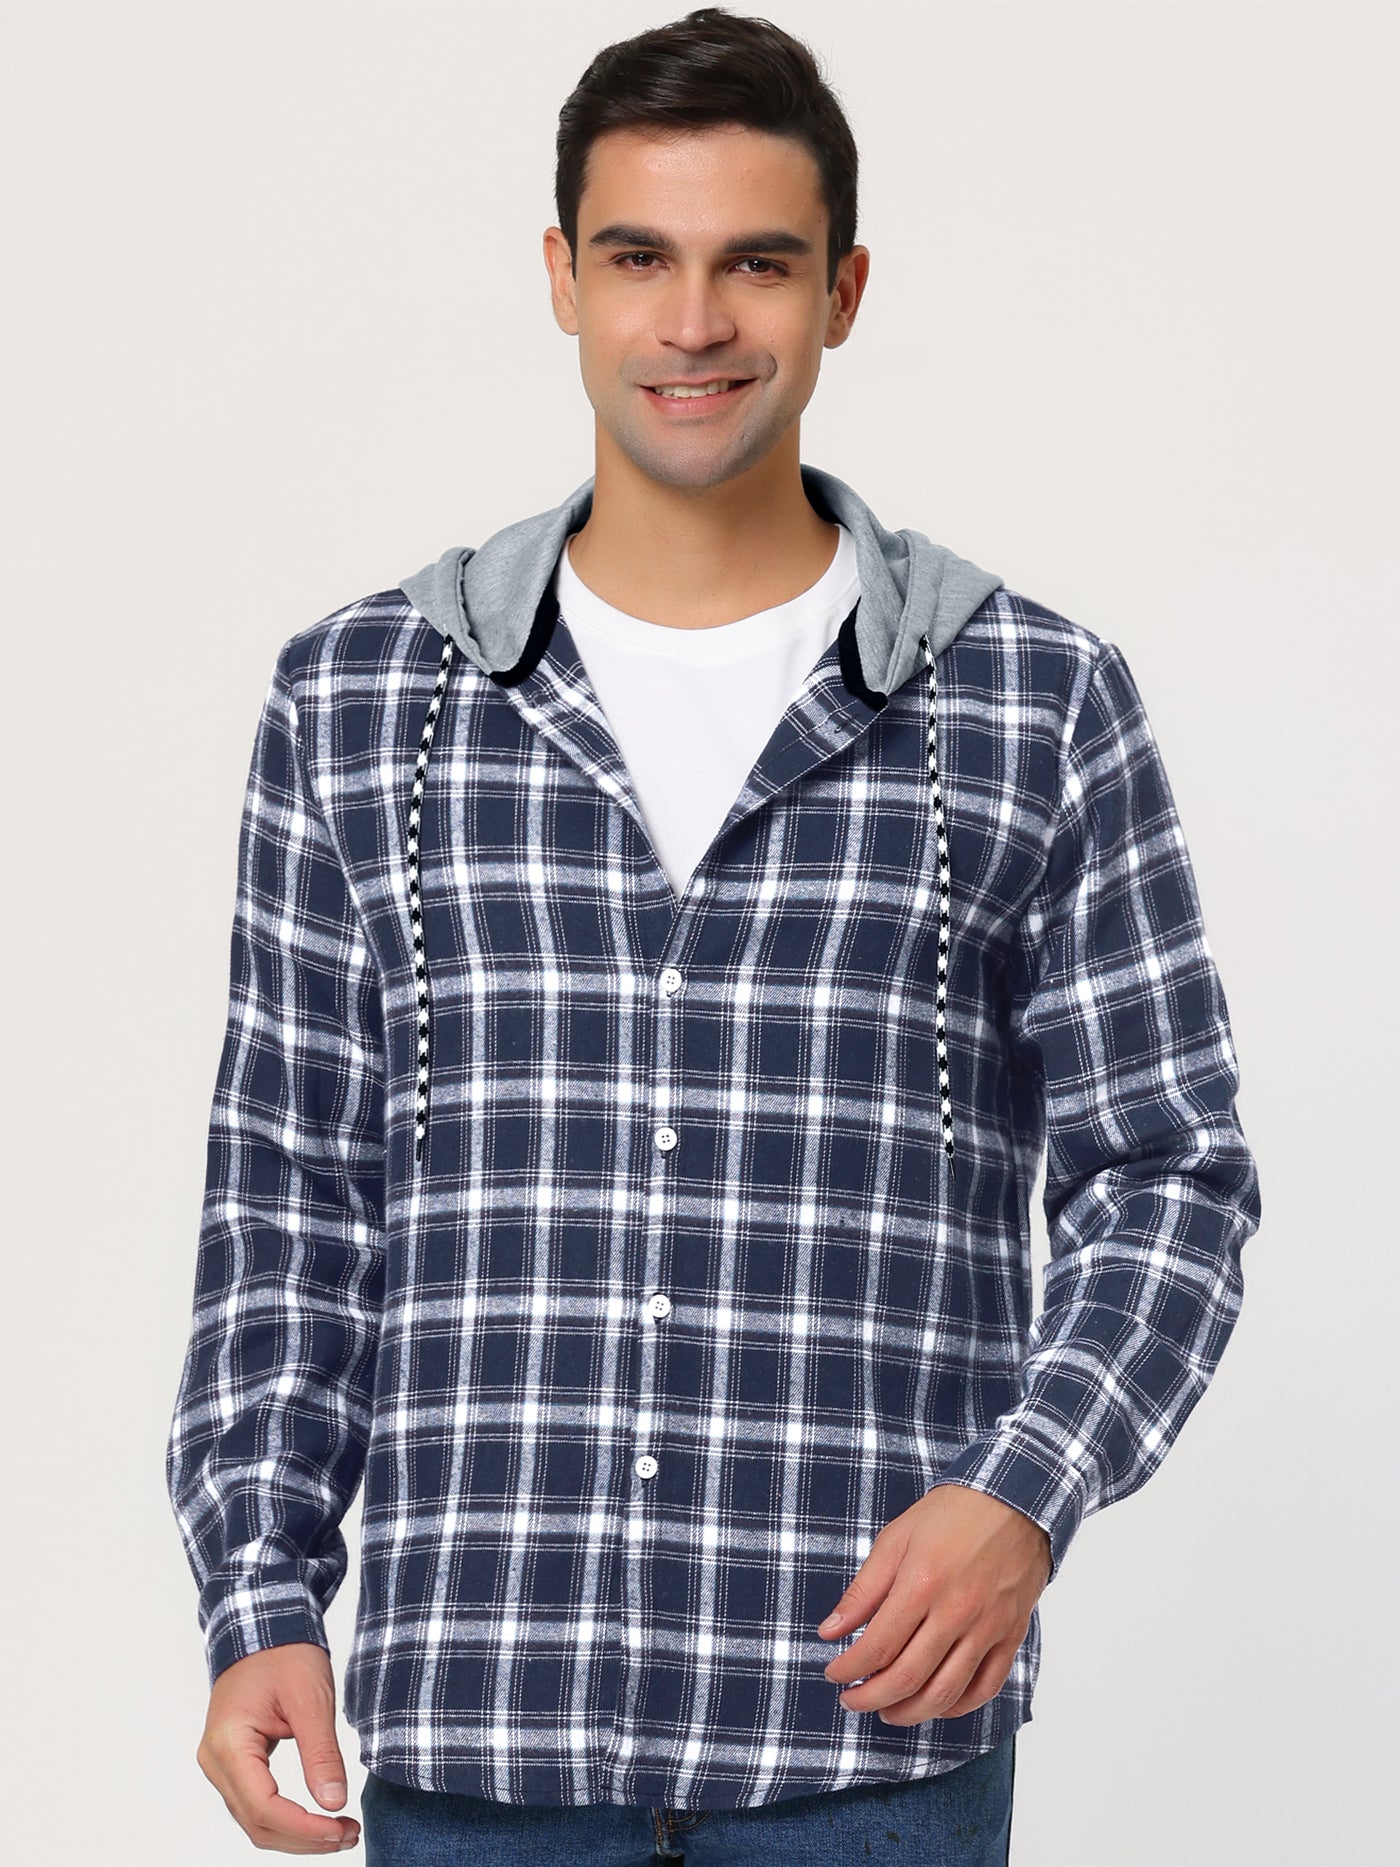 Bublédon Men's Hoodies Plaid Shirt Long Sleeves Button Checked Drawstring Hooded Jackets